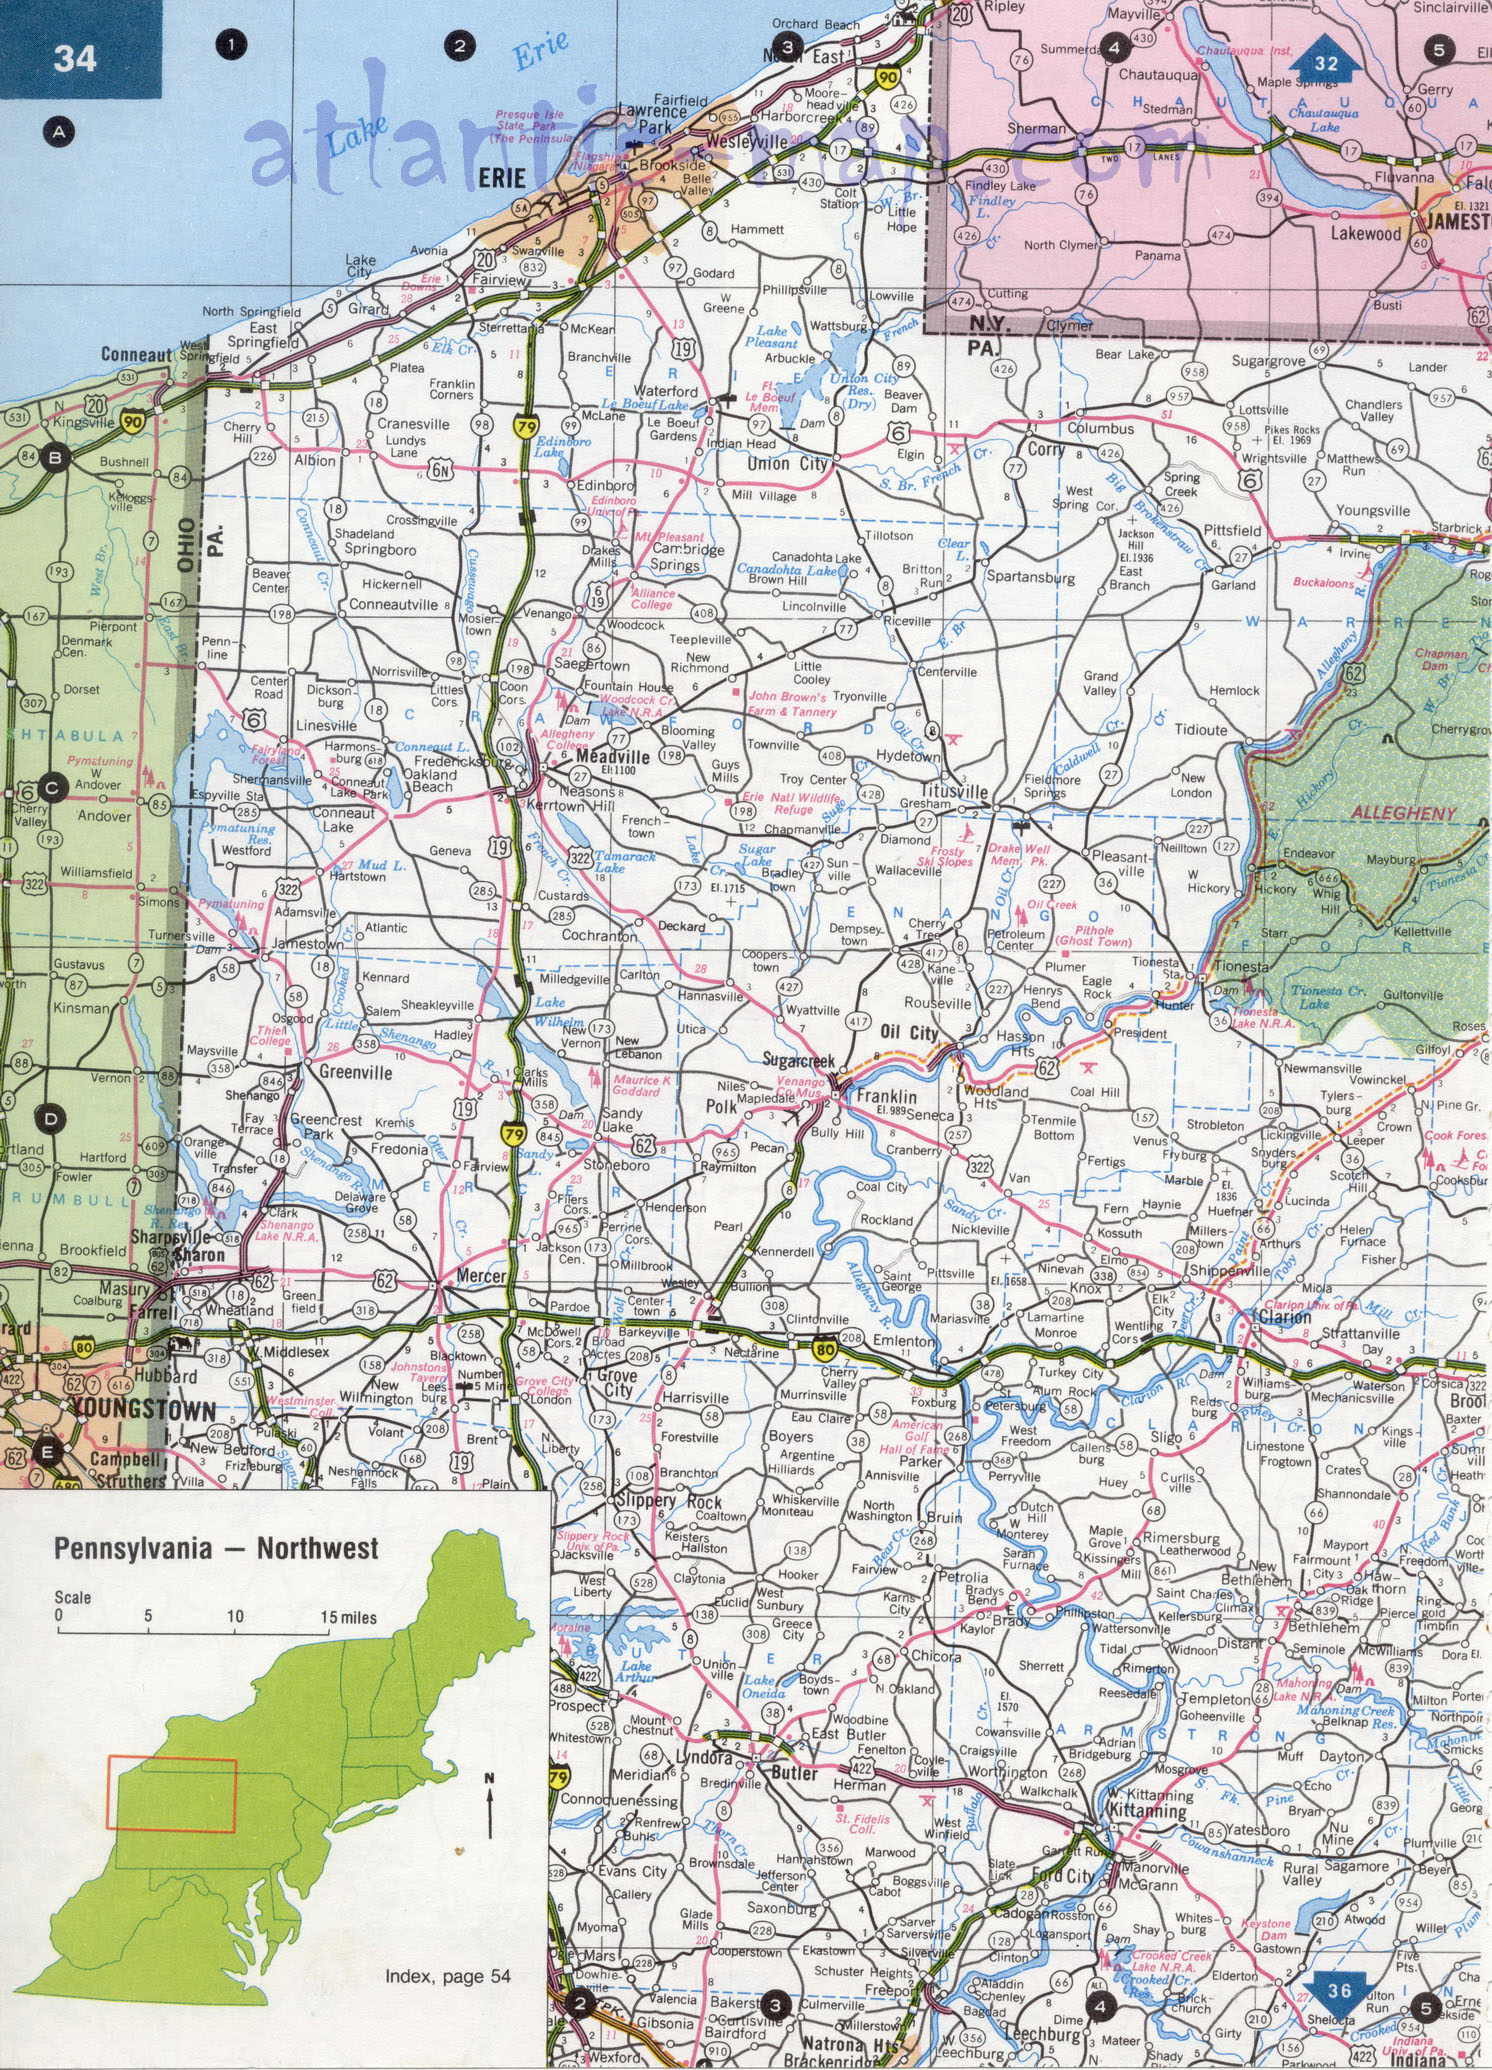 Map Of Northwest Pennsylvania Northwest Pennsylvania map image. Detailed road map of Northwest 